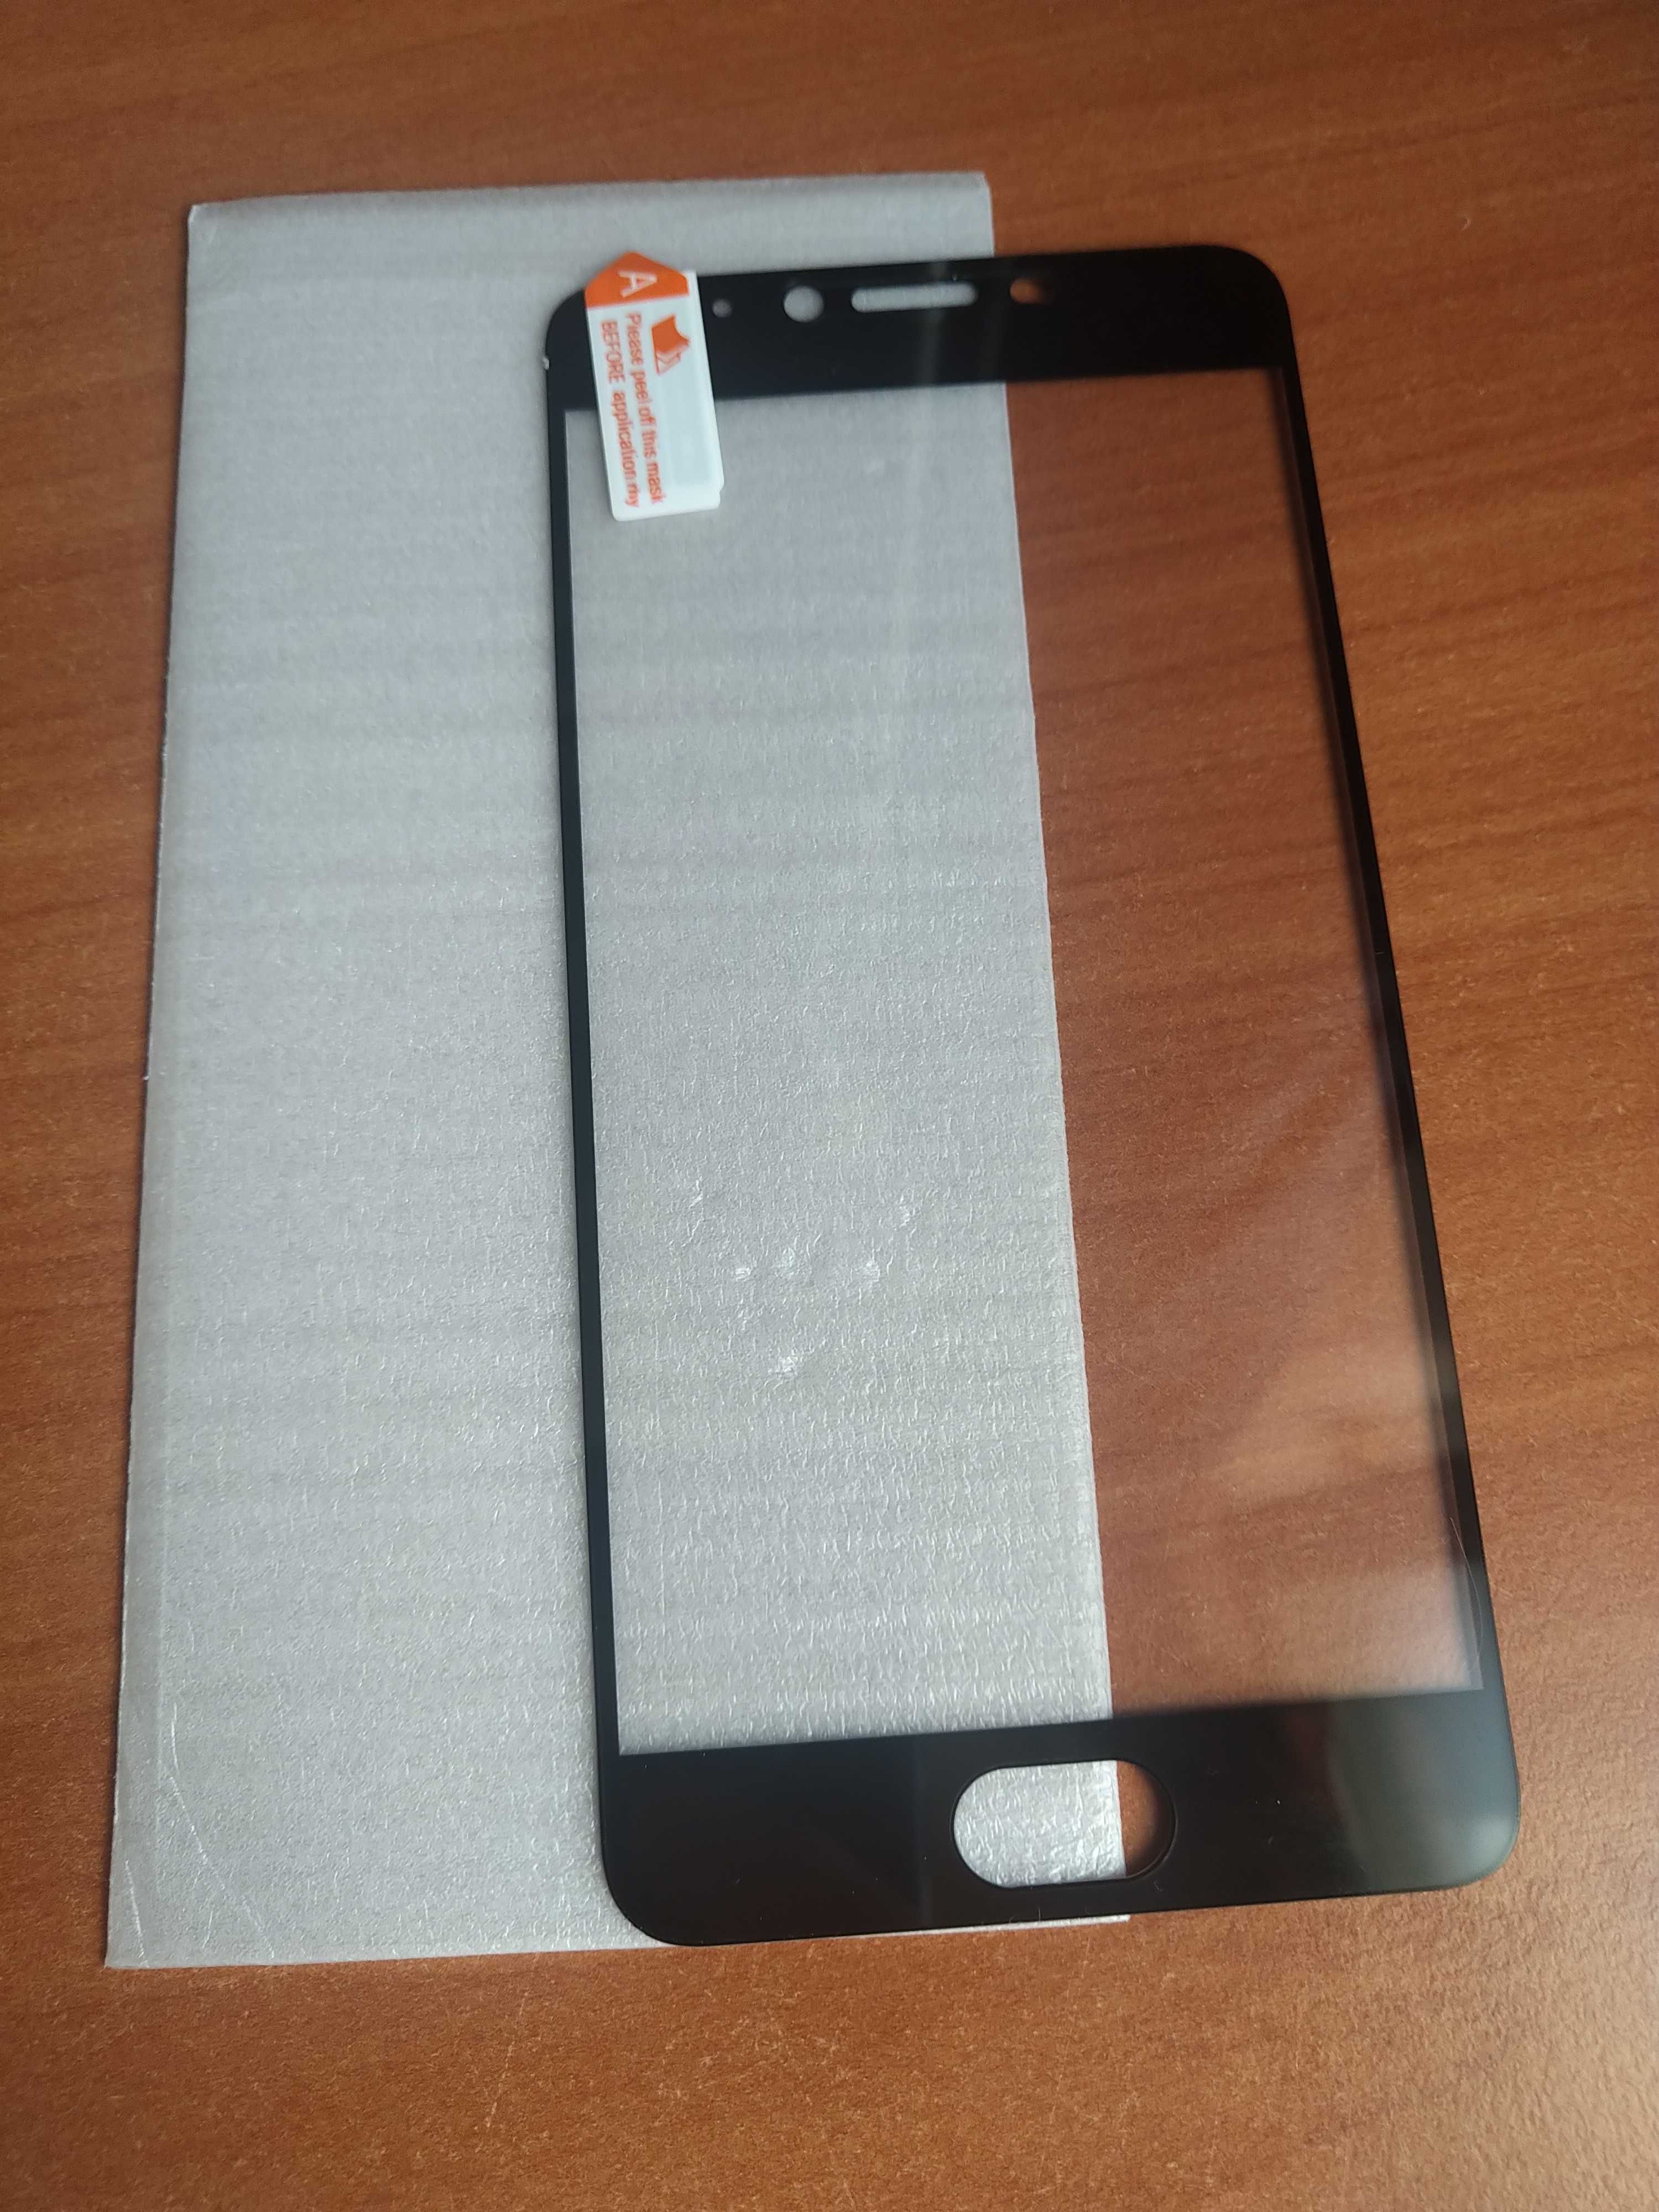 Meizu M5 Note 16GB Grey